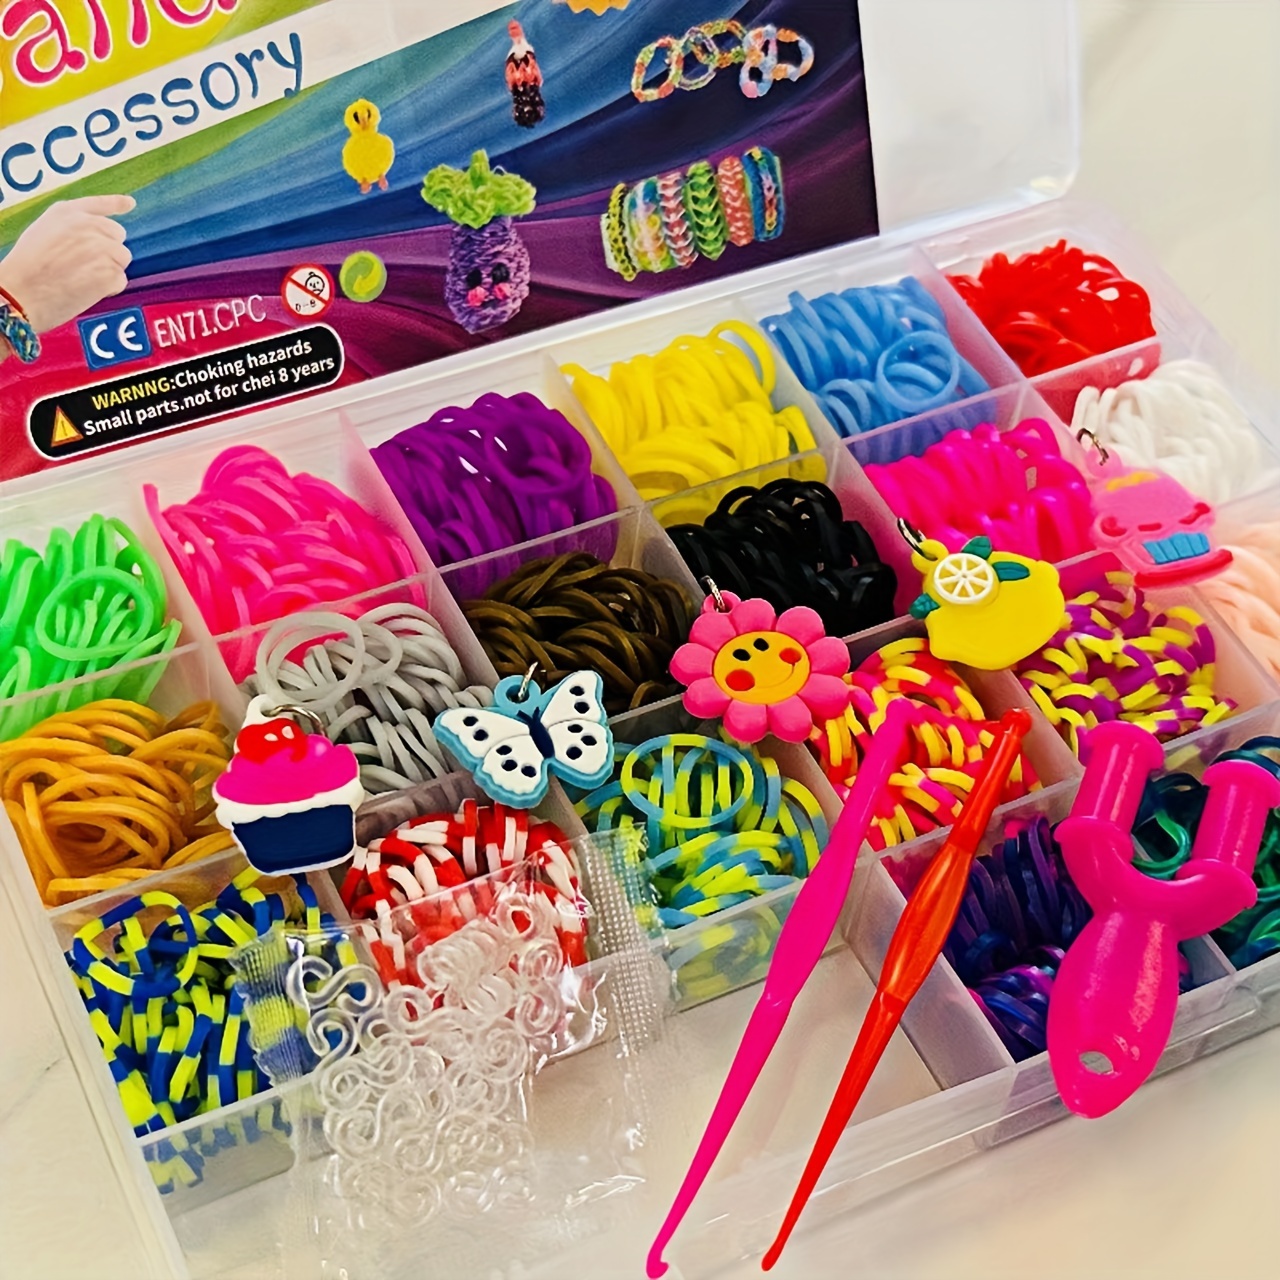 Laidan Bracelet Craft Set Making Kit for Kids Gift,DIY Girls Colorful Elastic Bracelet Making Set Arts Crafts for Girls Aged 3-12, Size: 1 Box